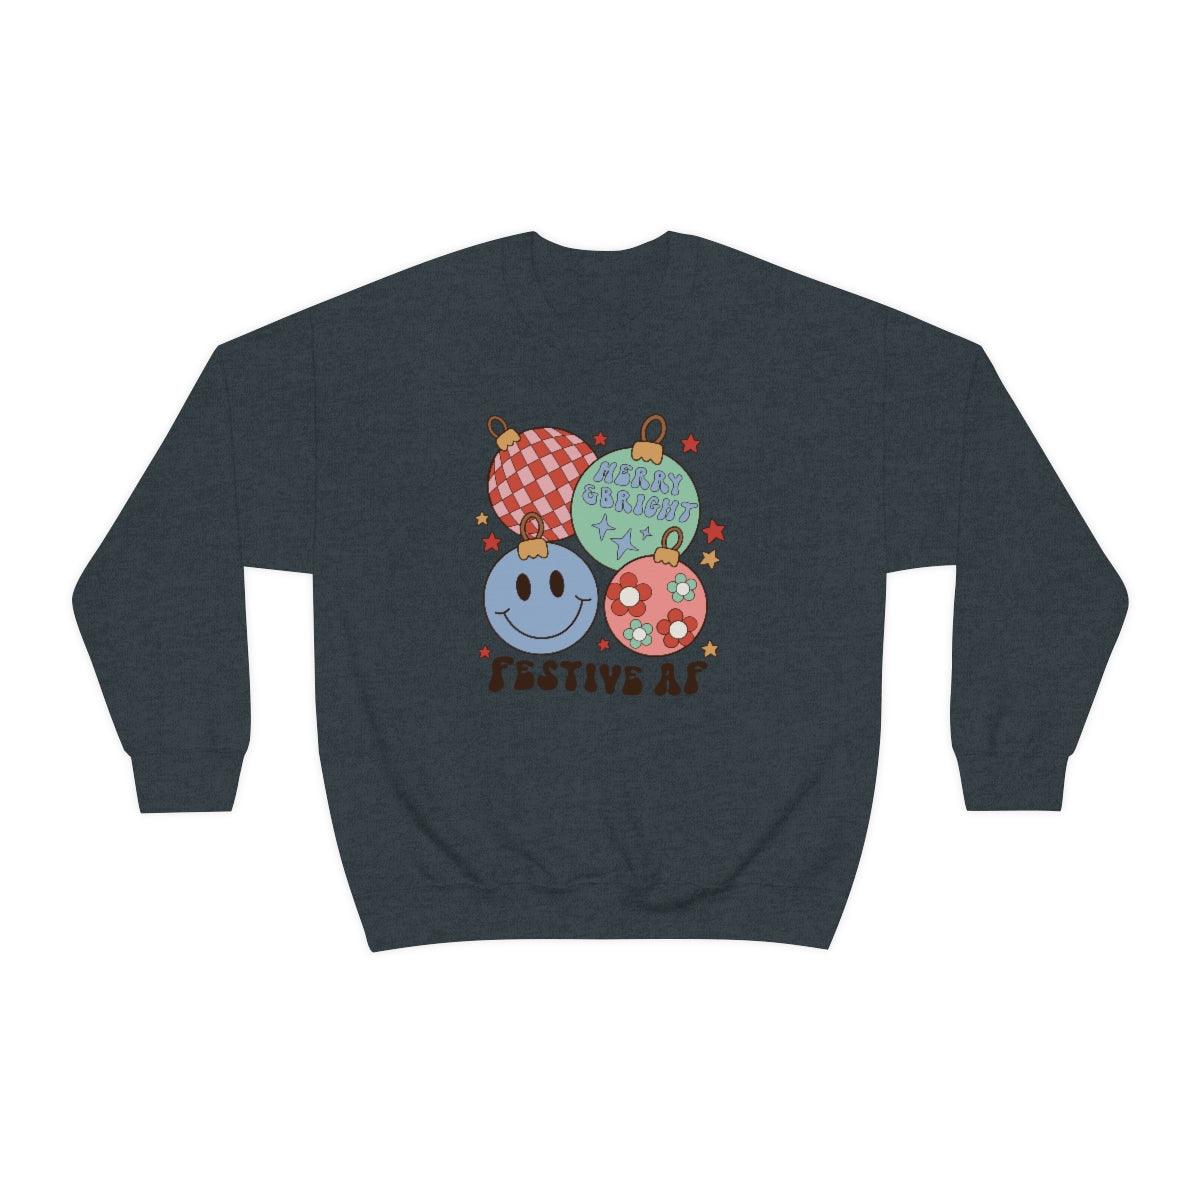 Retro Festive AF Christmas Crewneck Sweater - Crystal Rose Design Co.